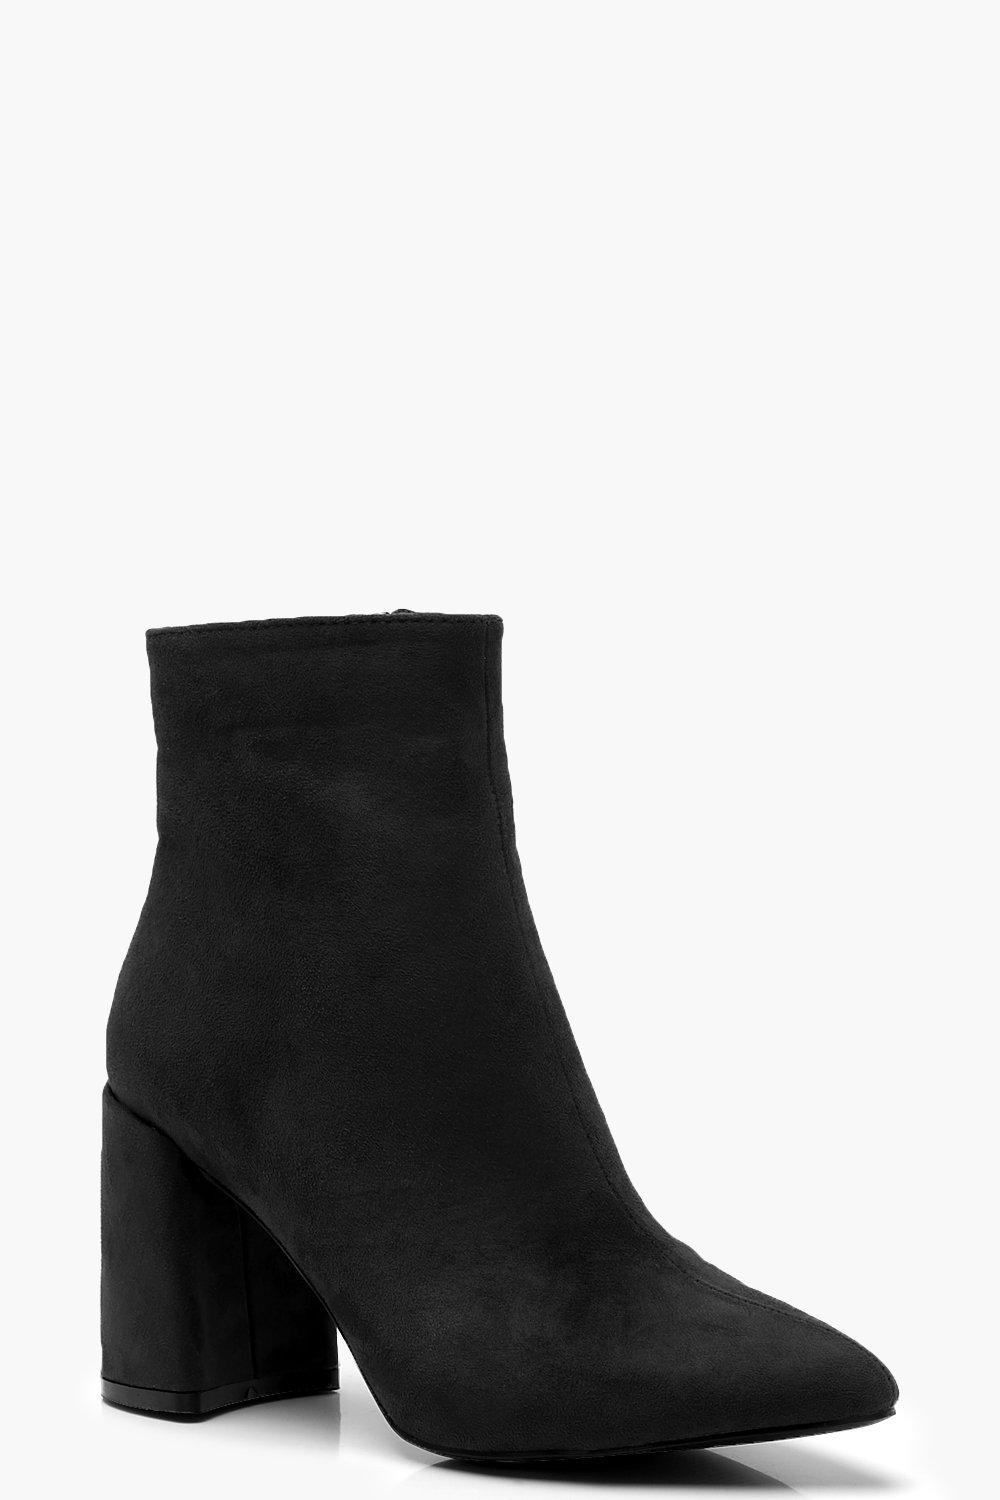 Womens Block Heel Sock Boots - Black - 8, Black